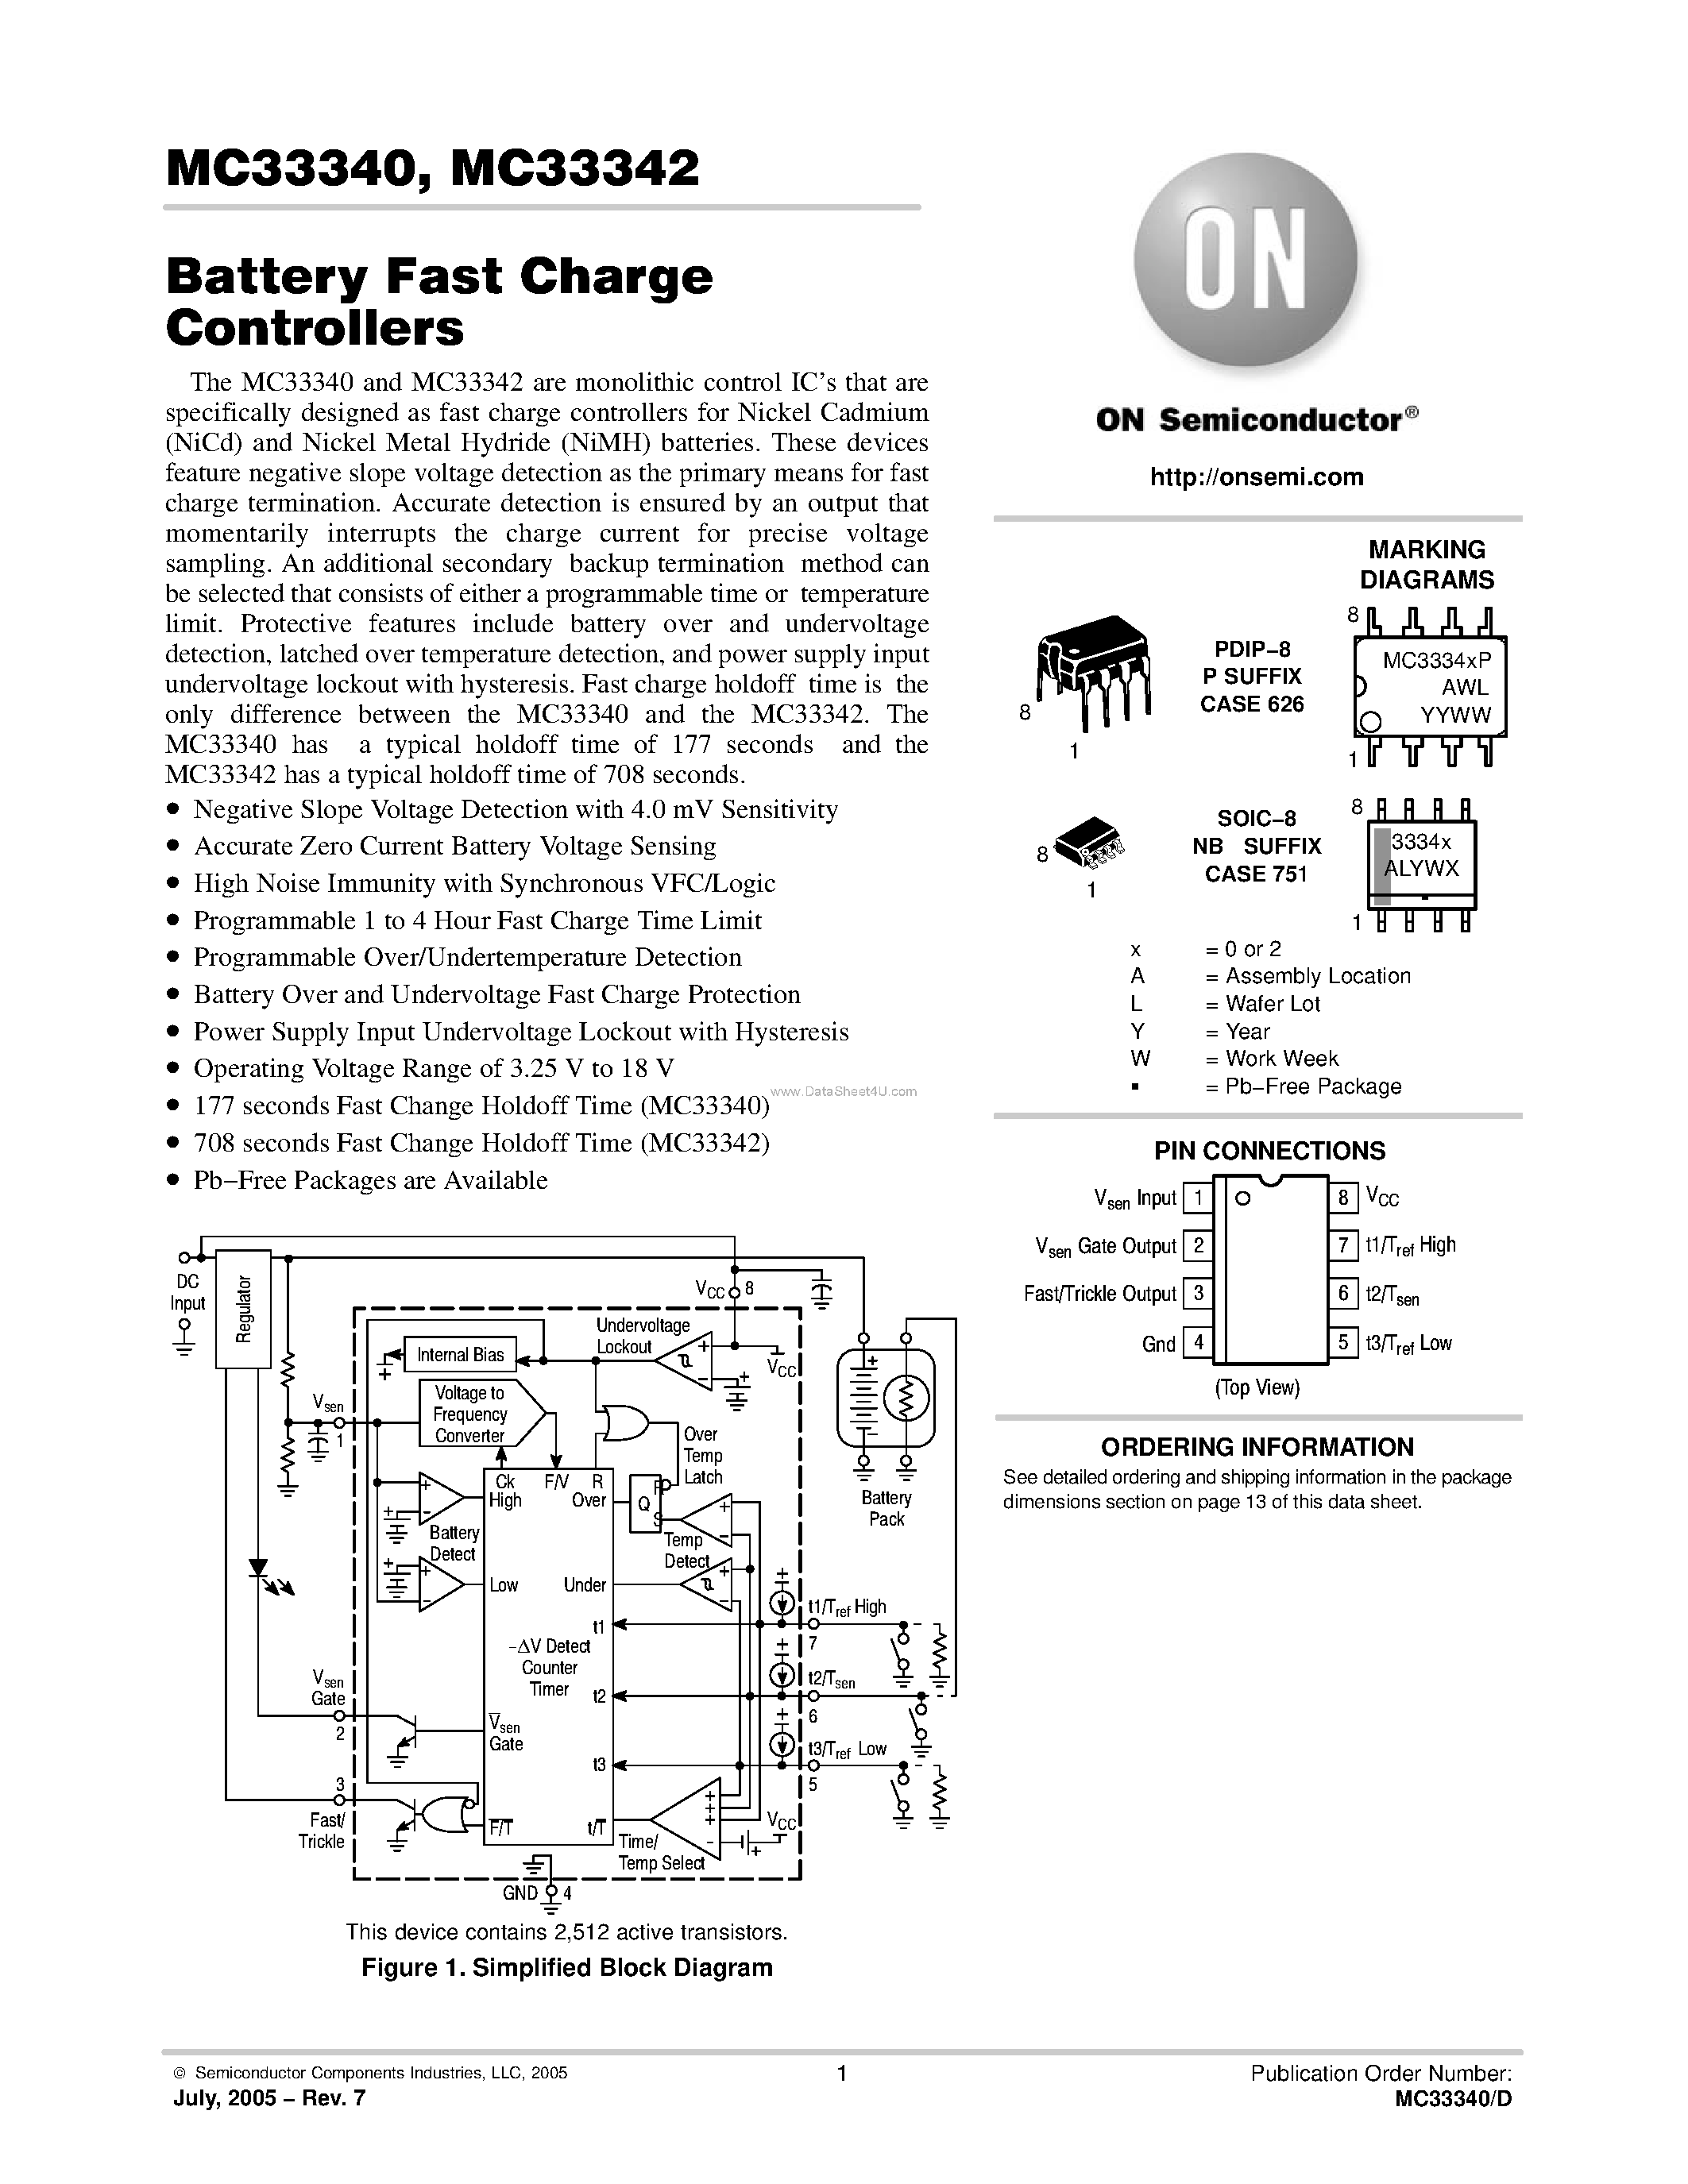 Datasheet MC33340 - (MC33340 / MC33342) Battery Fast Charge Controllers page 1